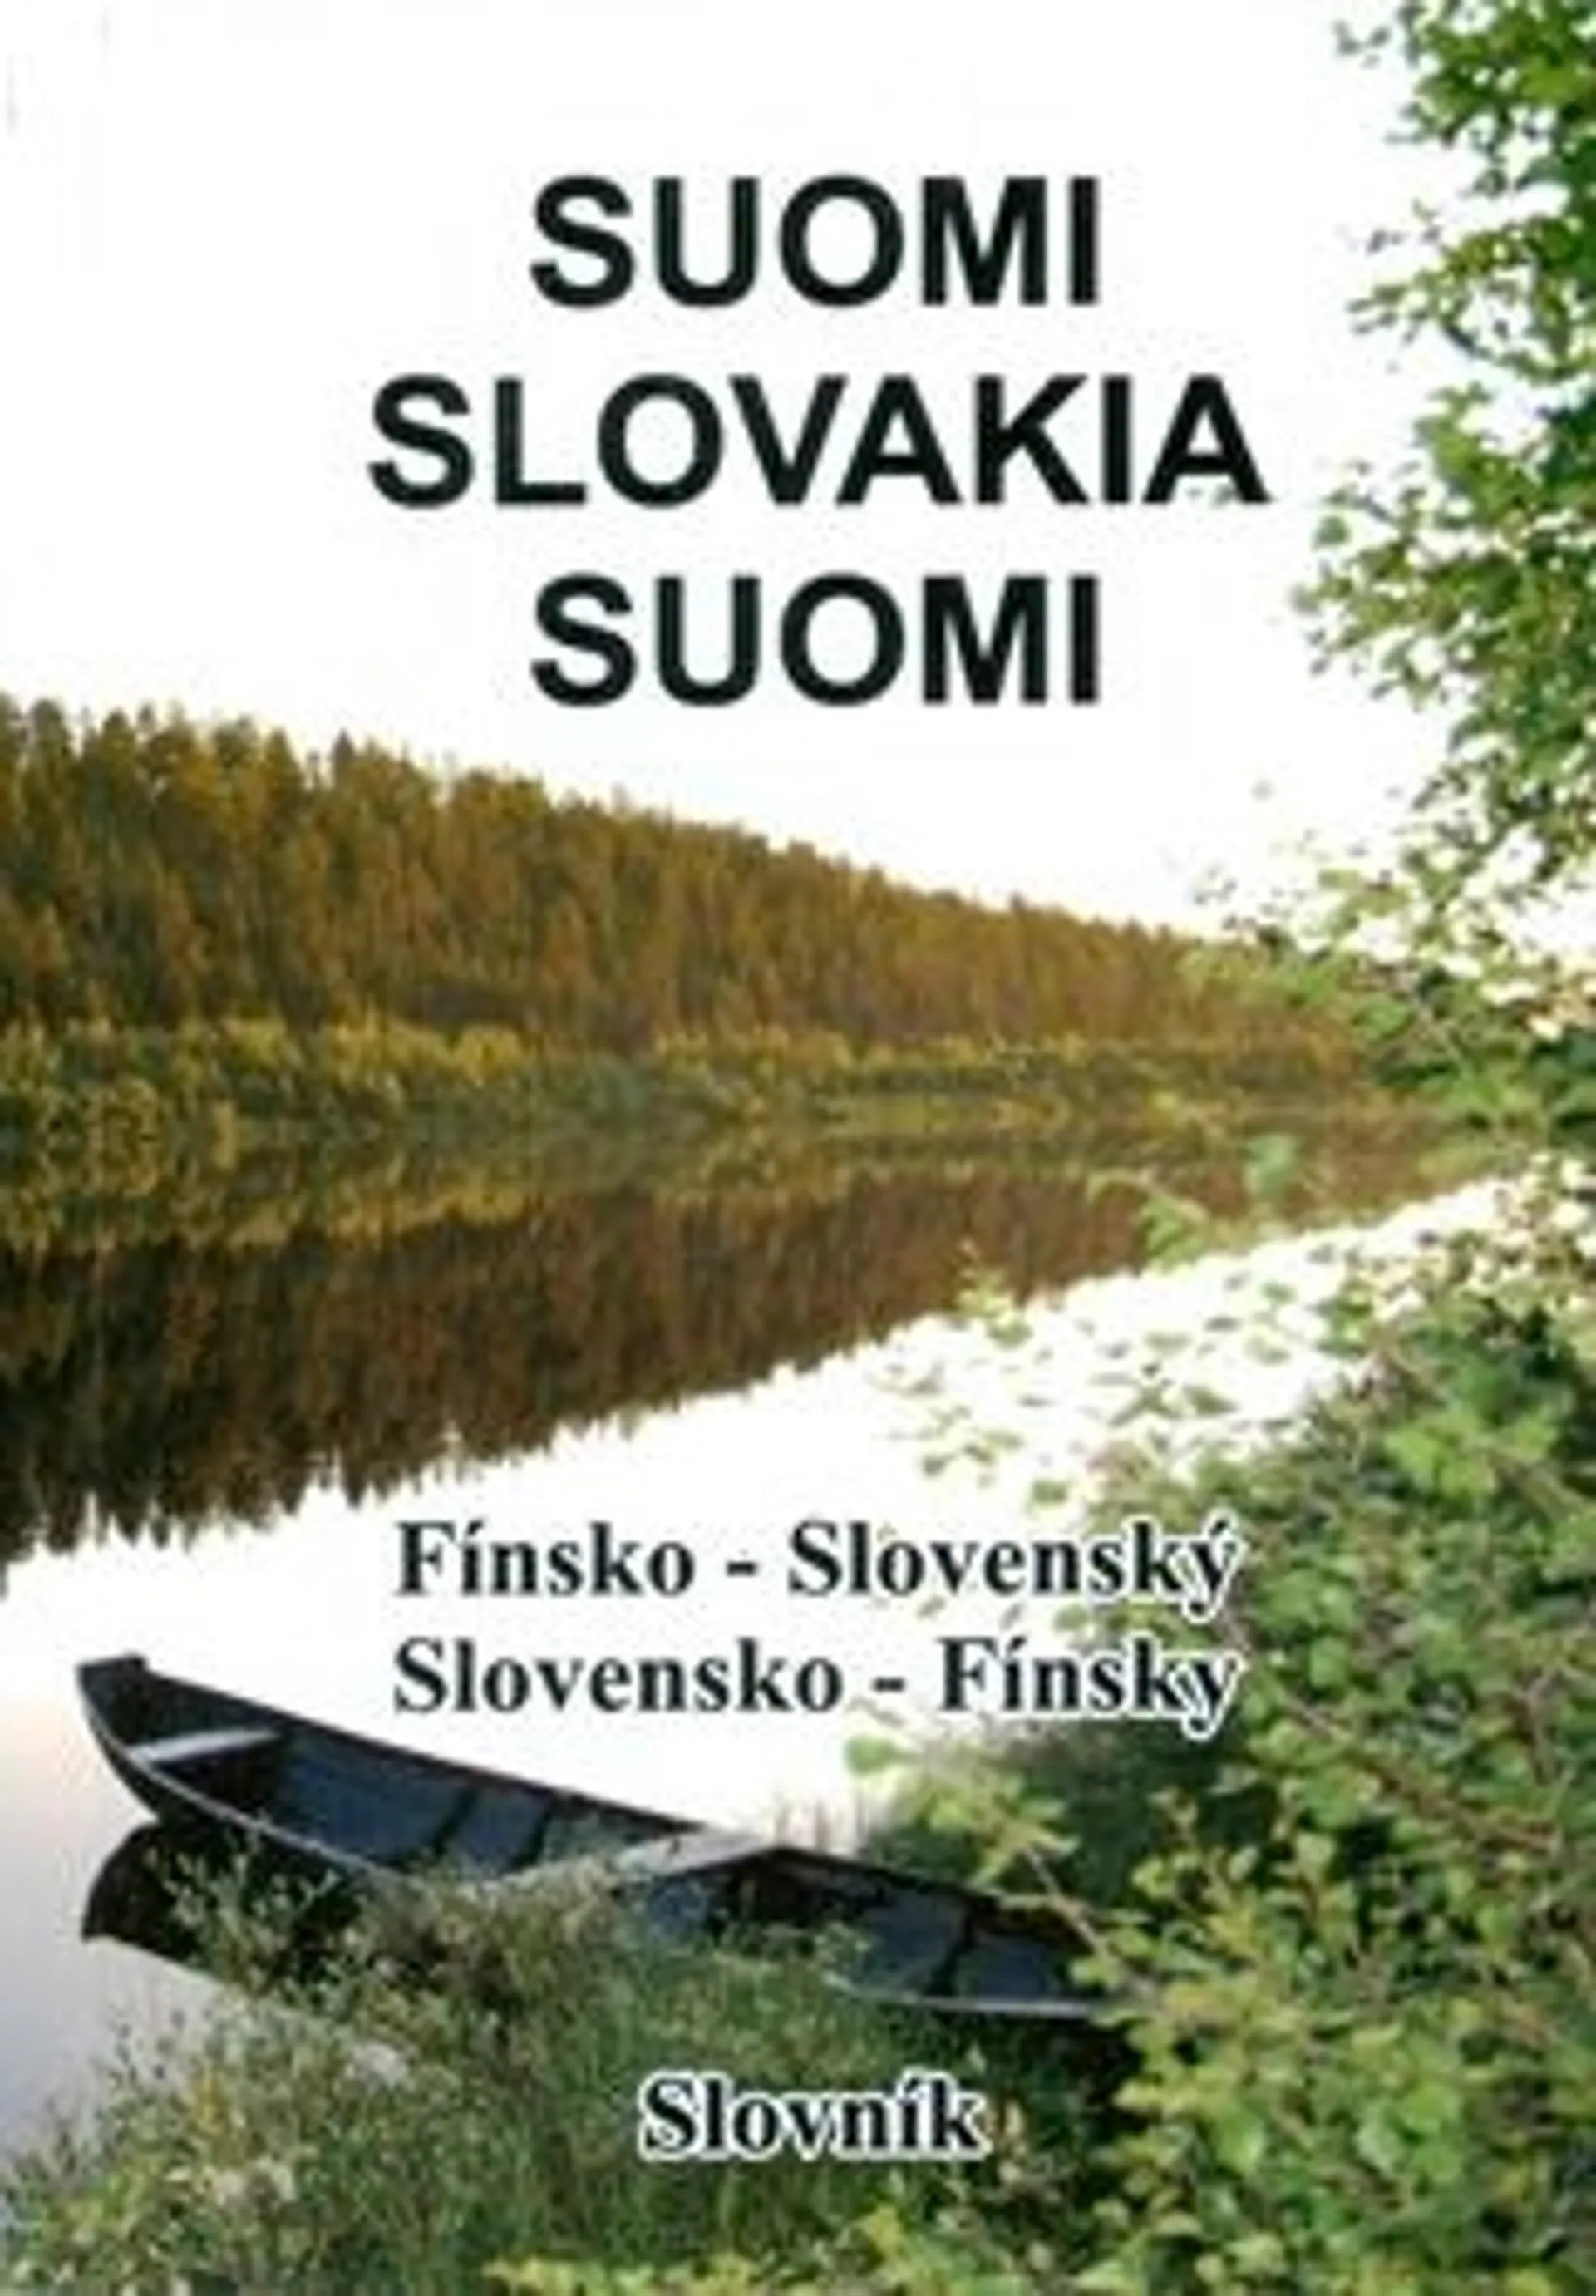 Suomi-slovakia-suomi - perussanasto